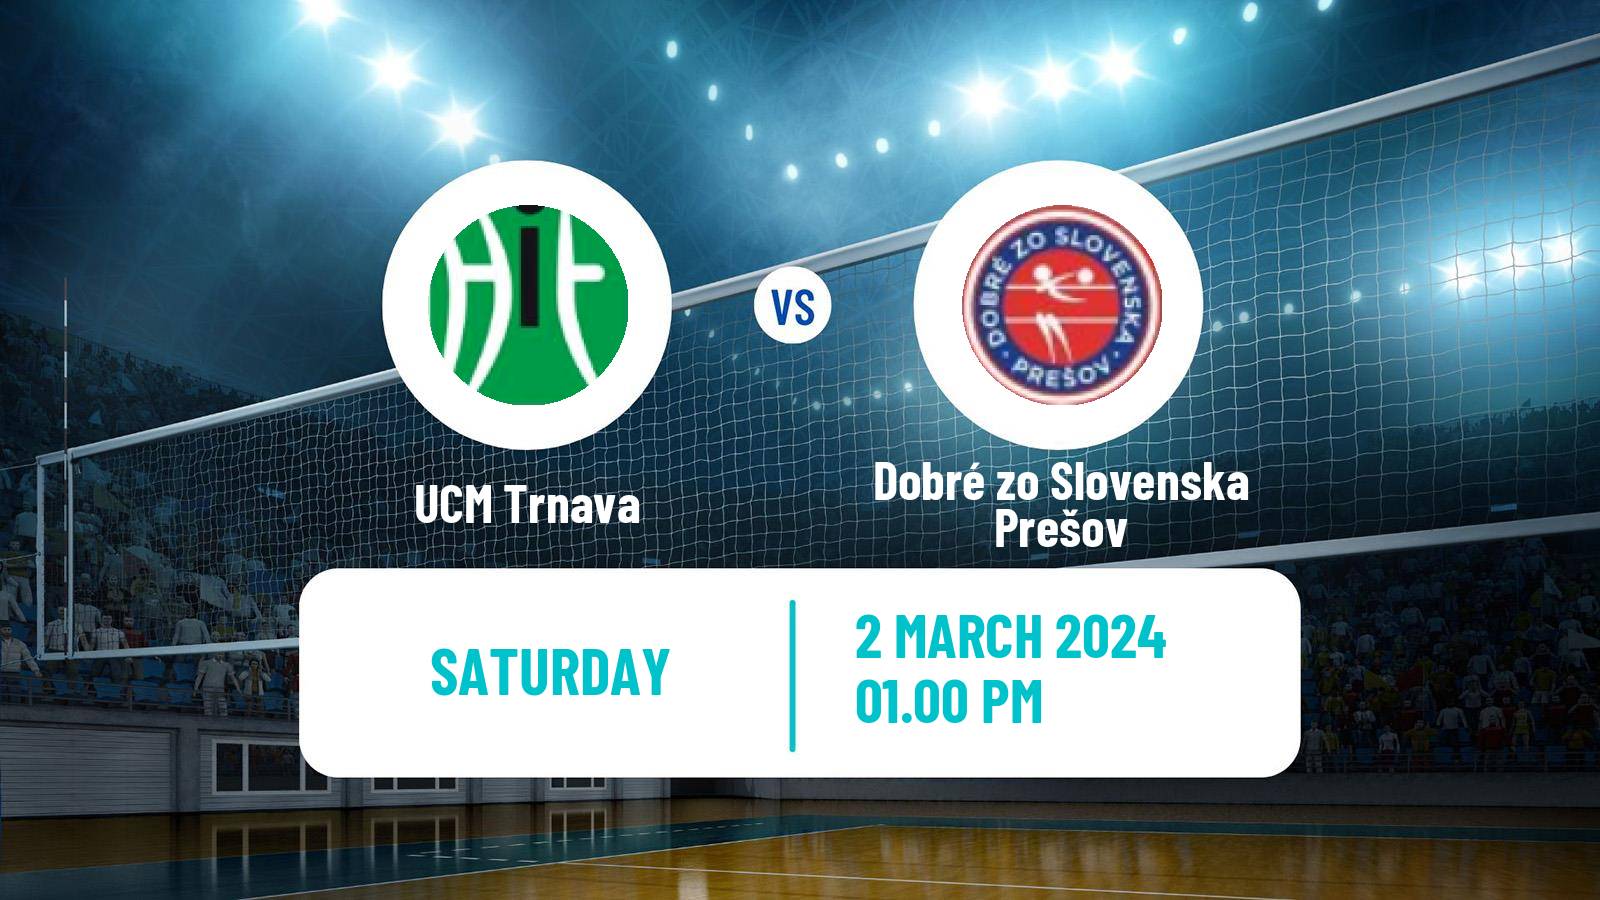 Volleyball Slovak Extraliga Volleyball Women UCM Trnava - Dobré zo Slovenska Prešov